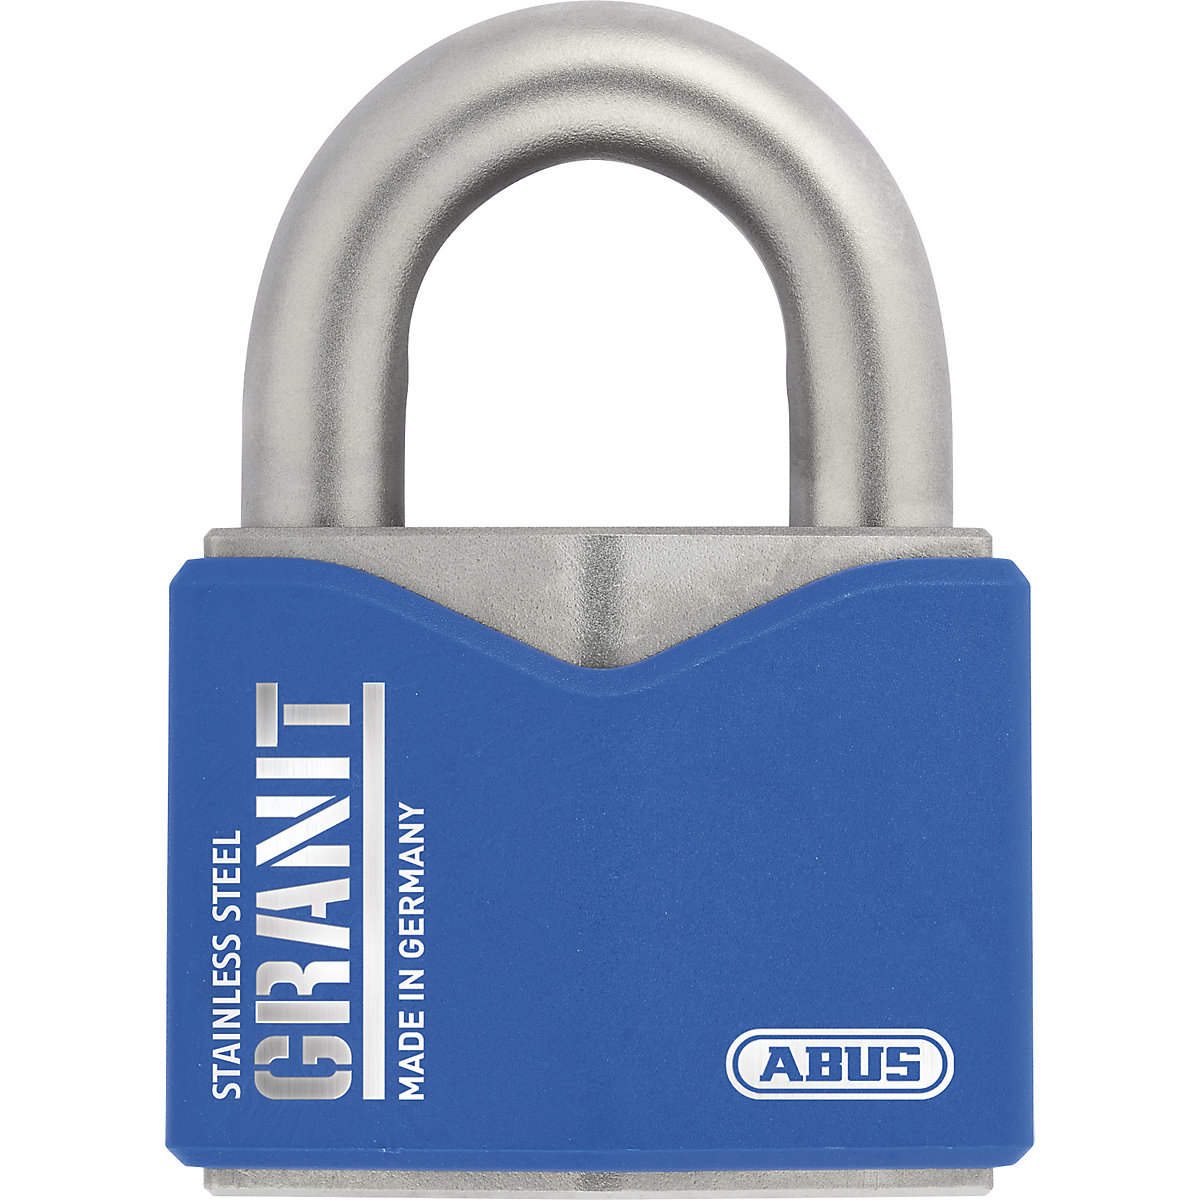 GRANIT™ padlock, stainless steel – ABUS: 37ST/55 B/DFNLI, pack of